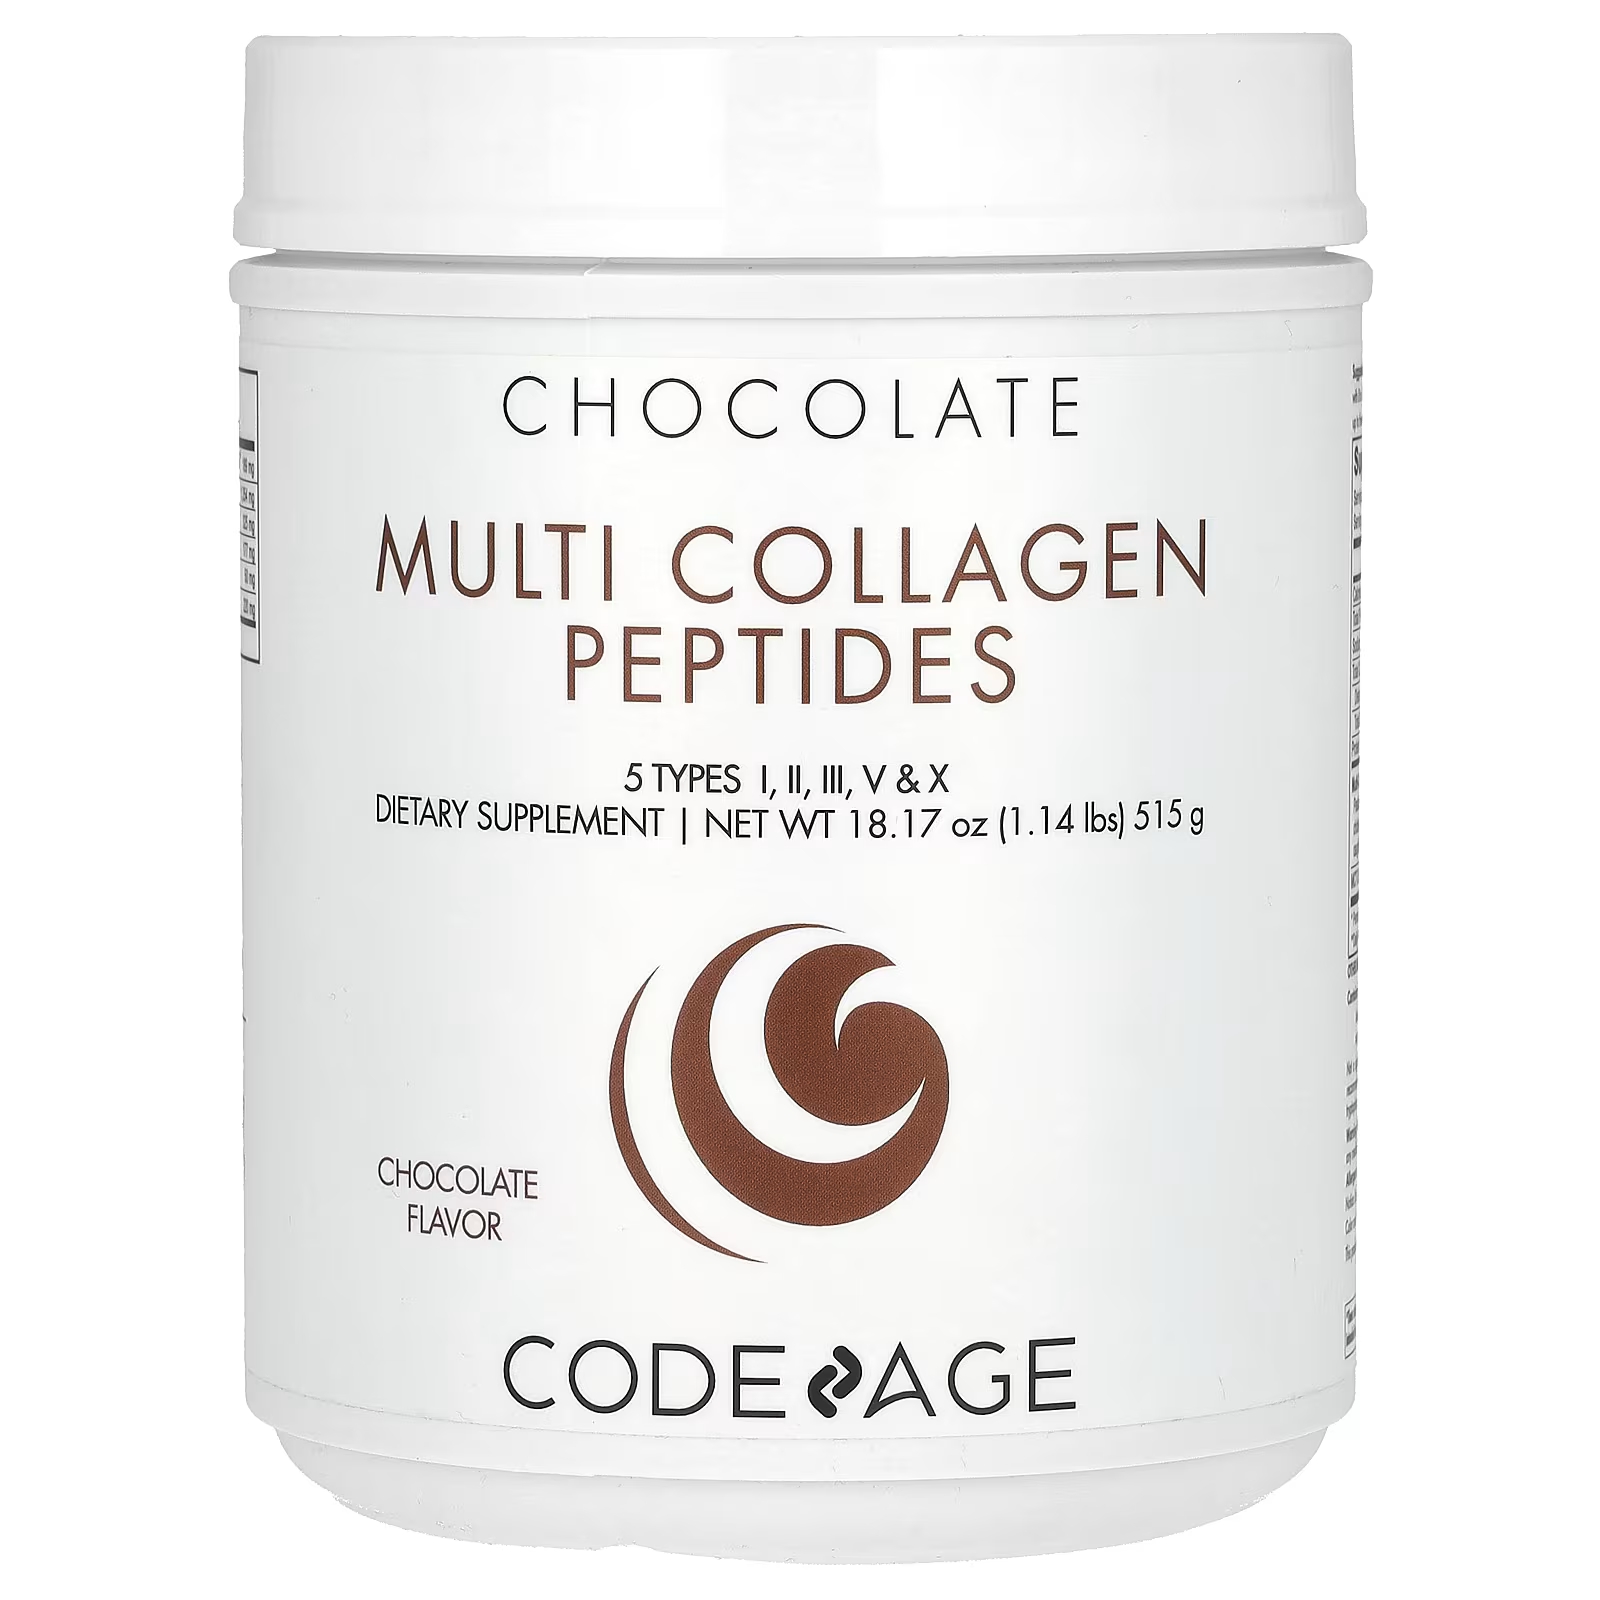 Codeage Multi Collagen Peptides Шоколад, 18,17 унций (515 г) codeage мультиколлагеновые пептиды 5 типов коллагена i ii iii v и x шоколад 515 г 18 17 унции